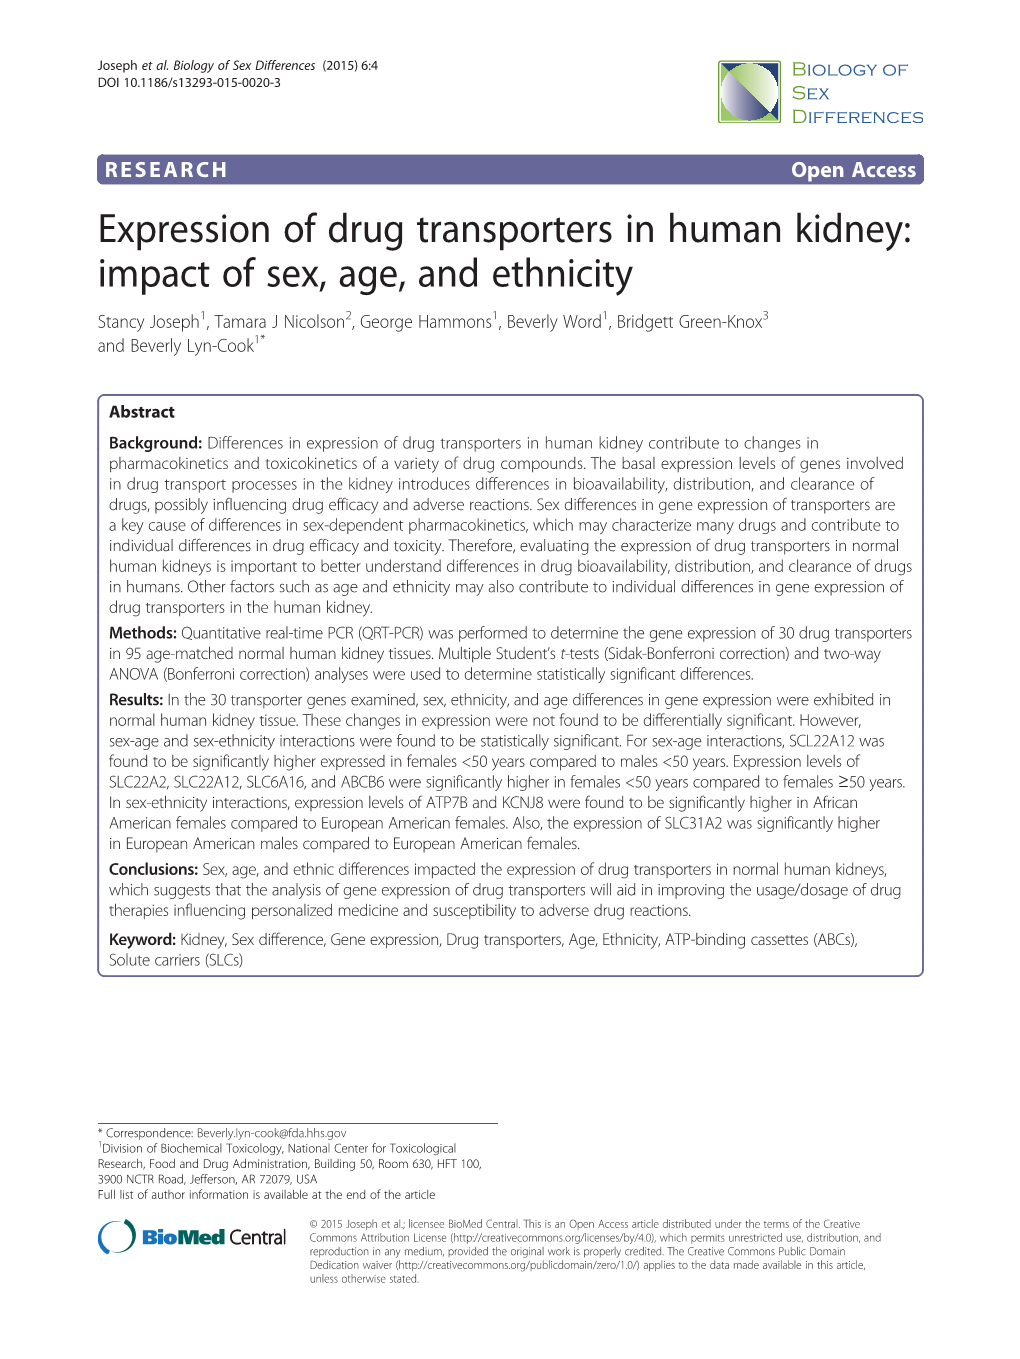 Expression of Drug Transporters in Human Kidney